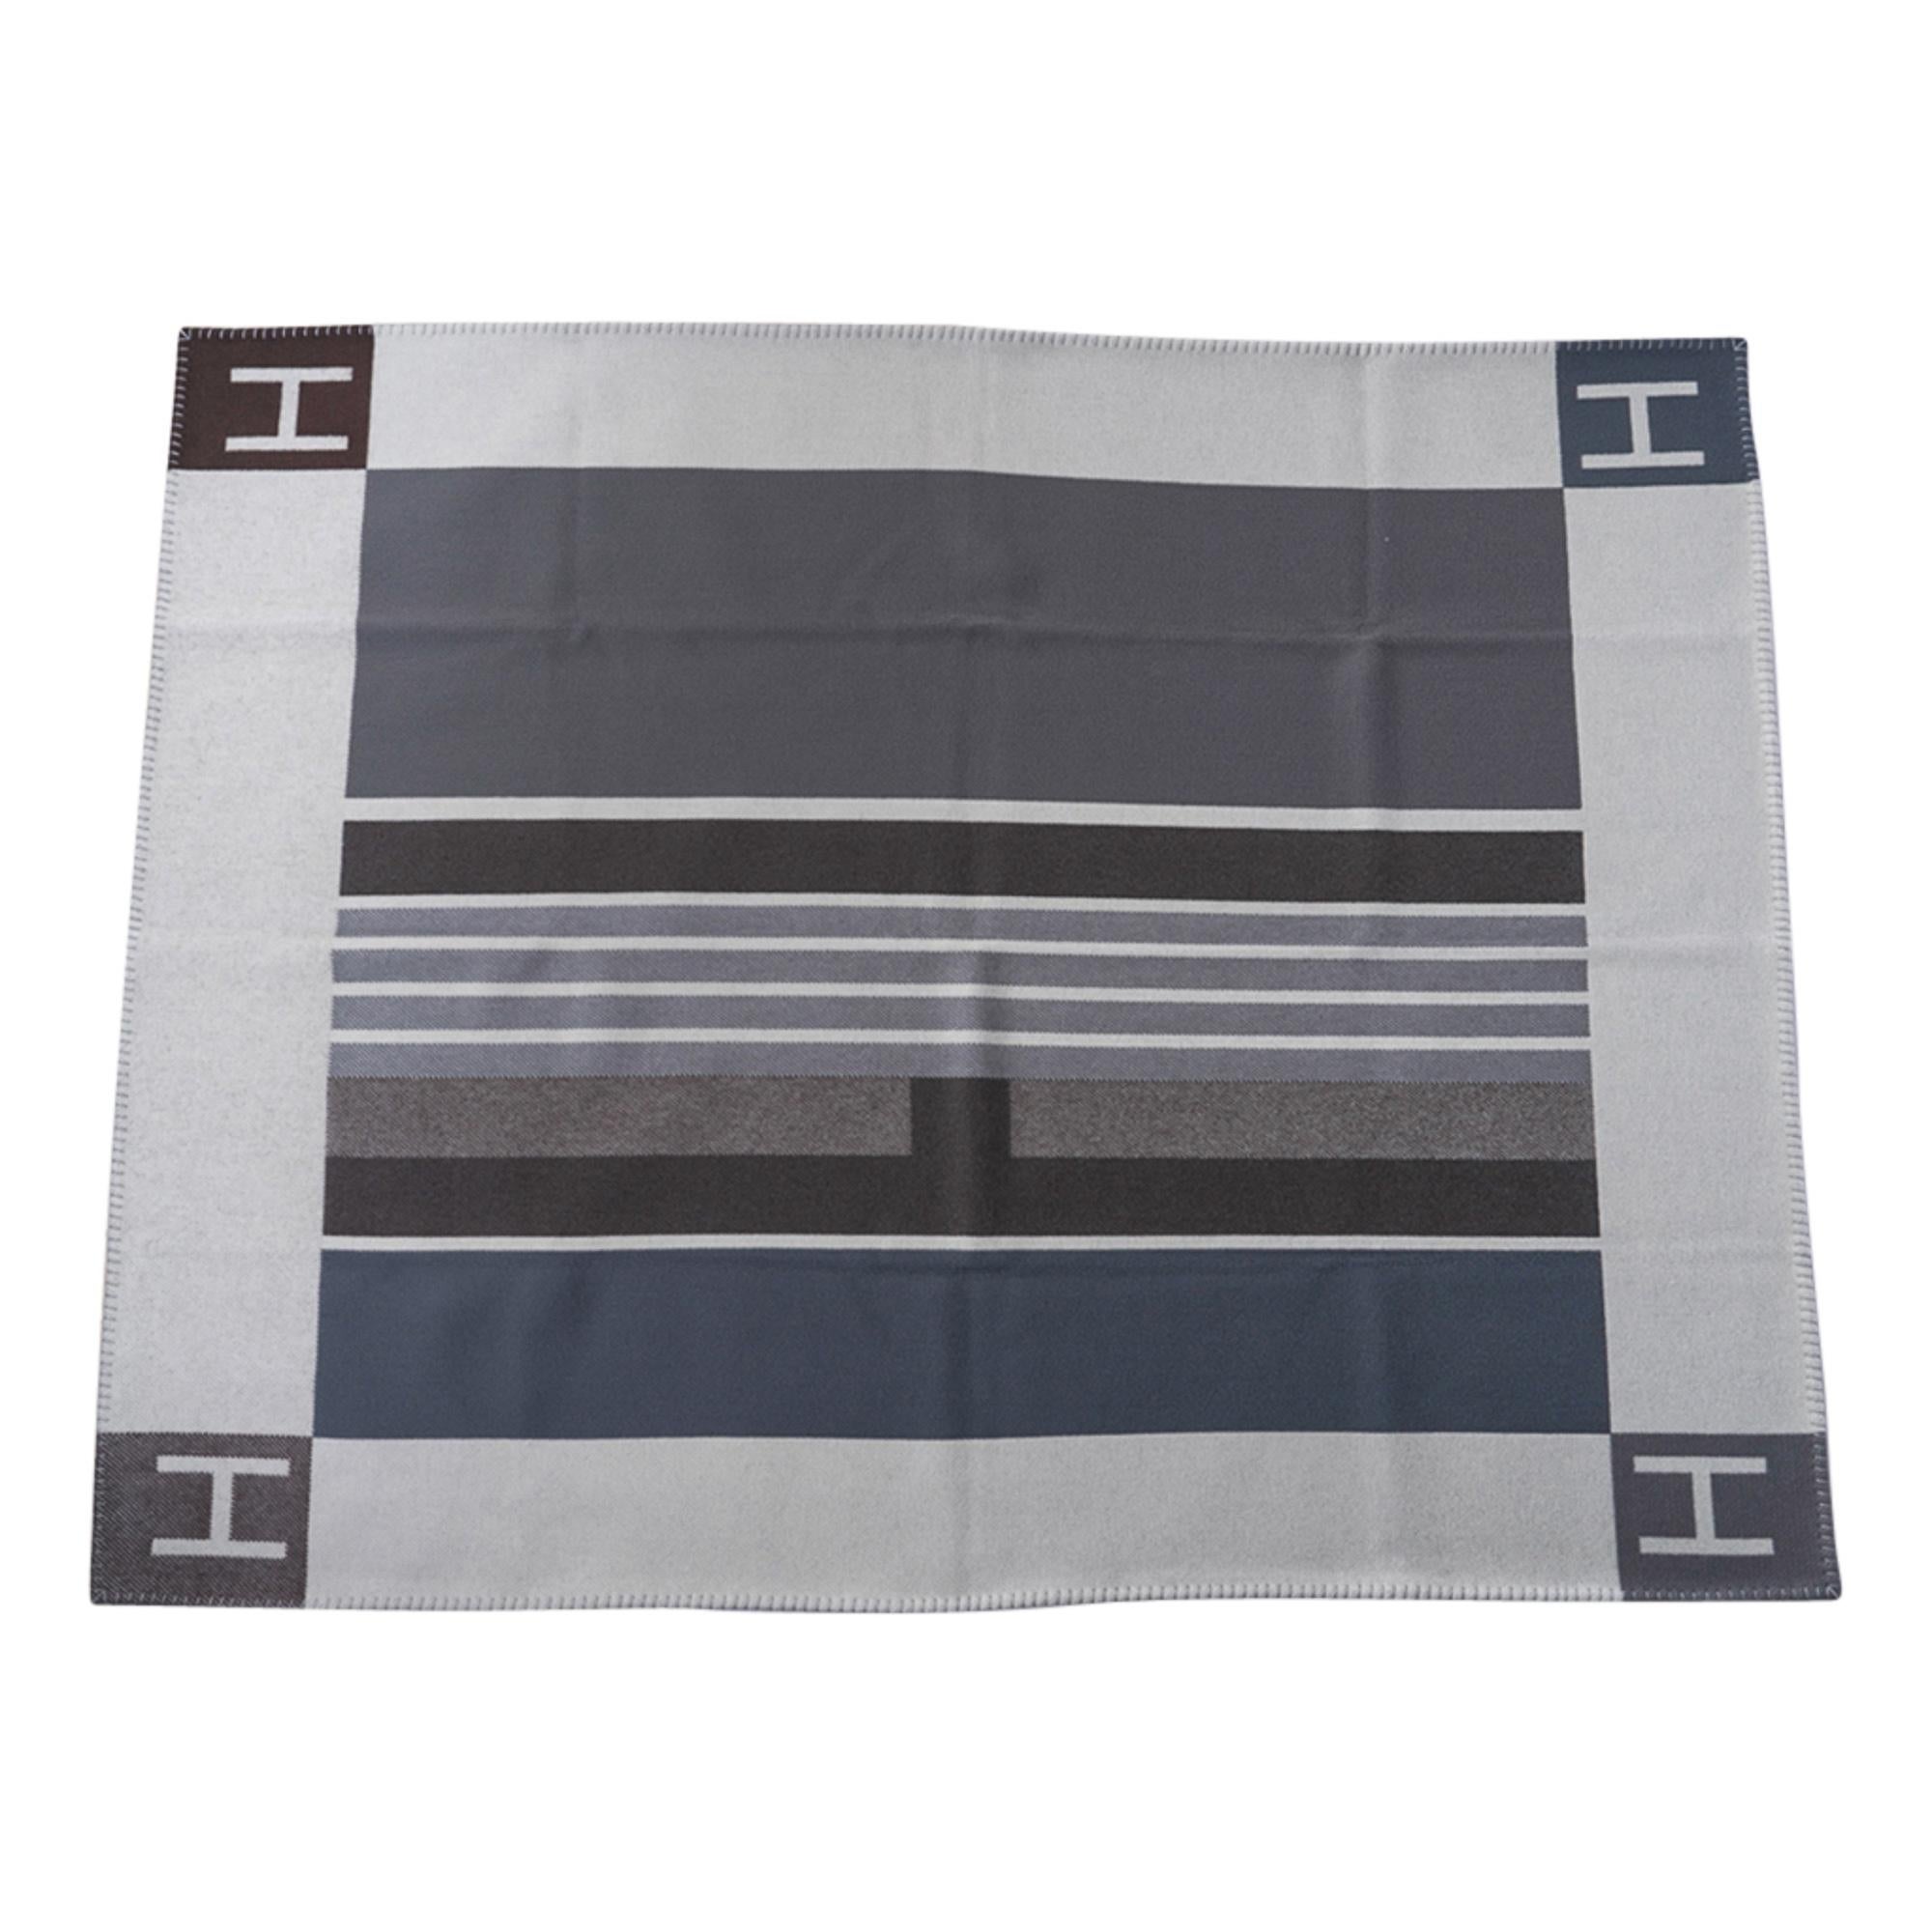 Hermes Avalon Vibration Throw Blanket Gris / Ecru Wool / Cashmere New 6